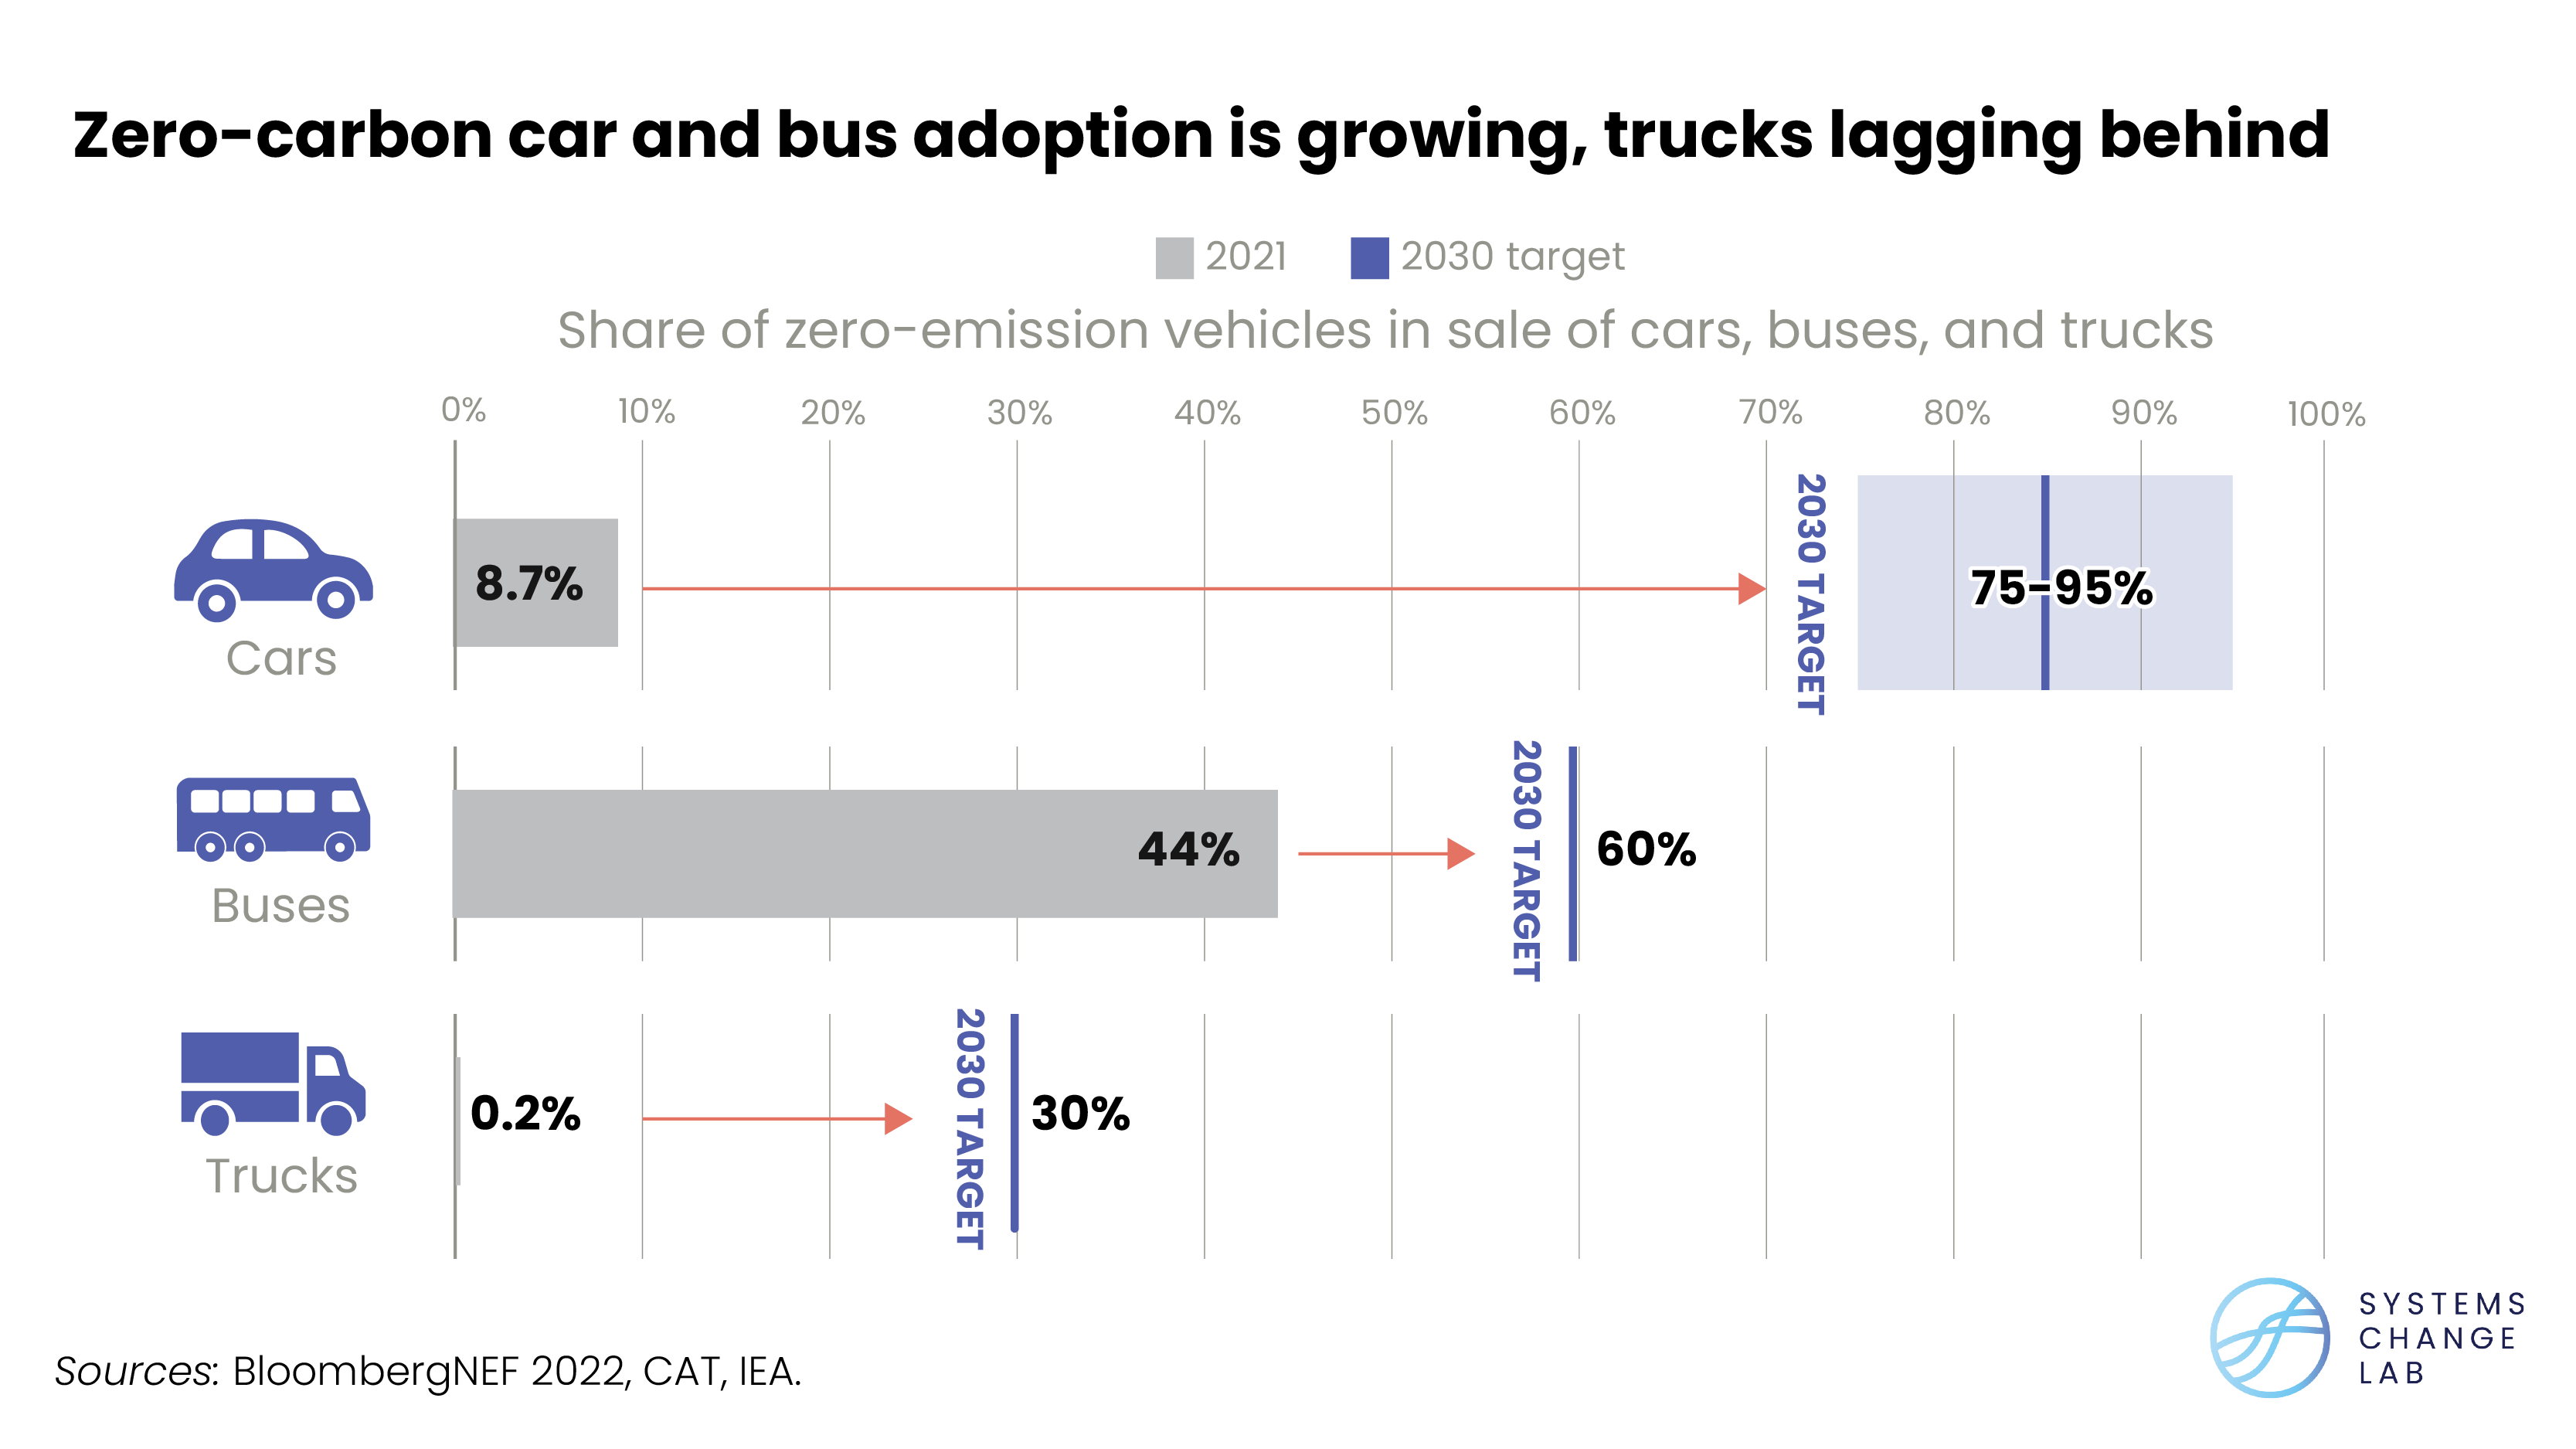 Zero-carbon cars, buses, trucks